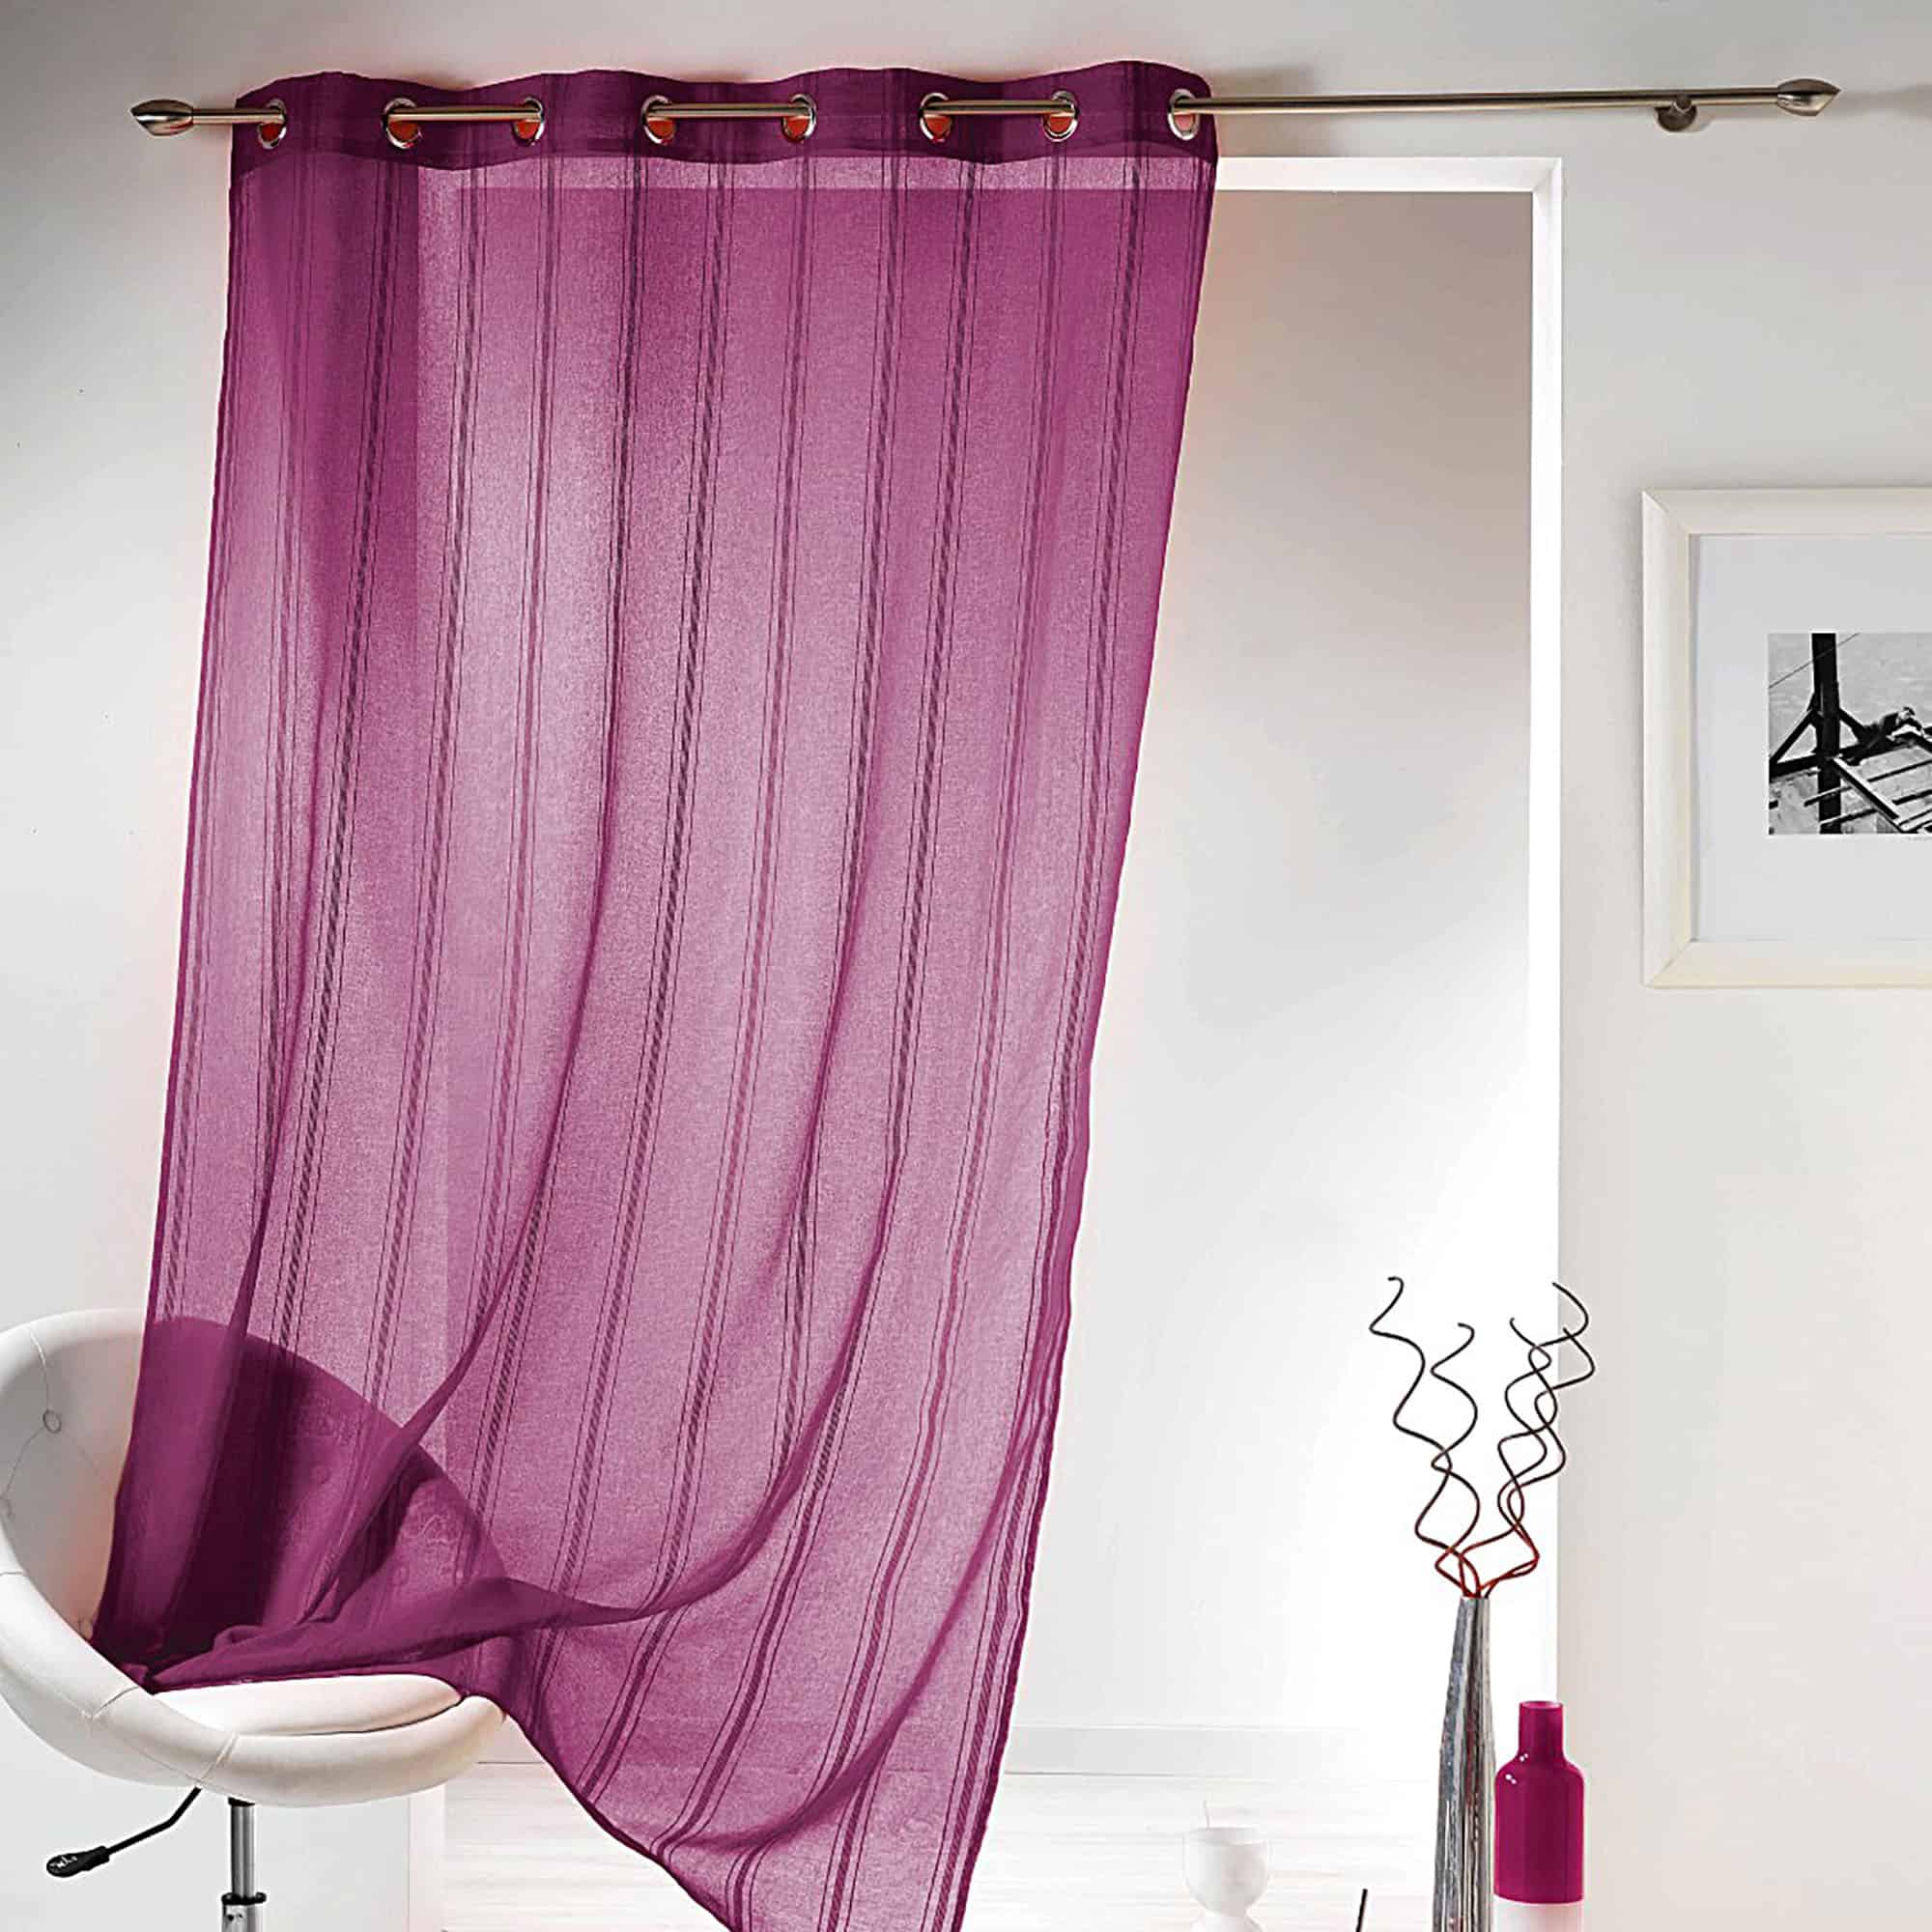 plum purple with subtle stripes details sheer curtain panel 1 piece for large window